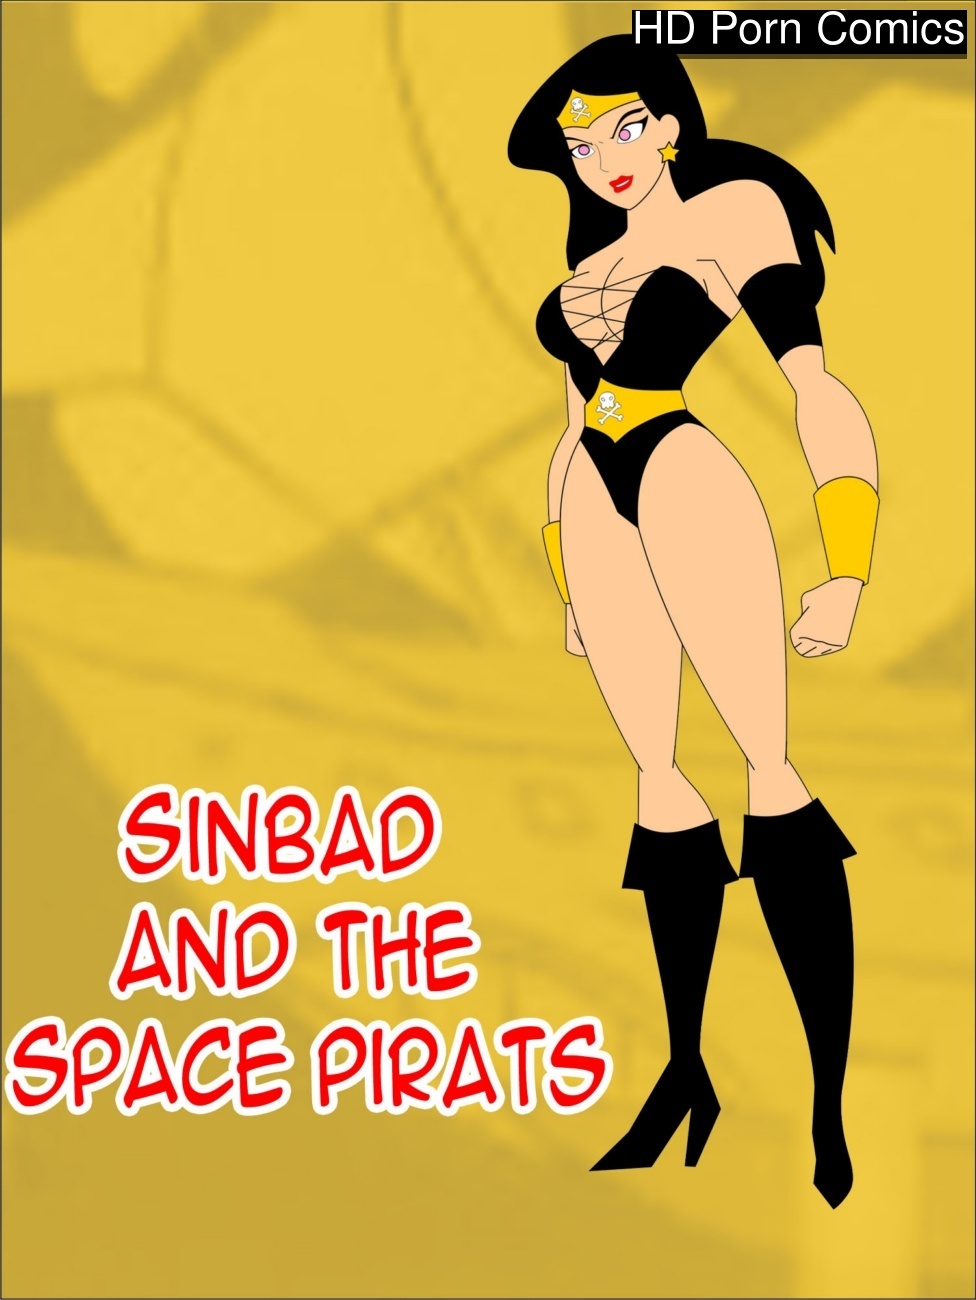 Pirates Sex Full Movies Download - Sinbad And The Space Pirates Sex Comic - HD Porn Comics